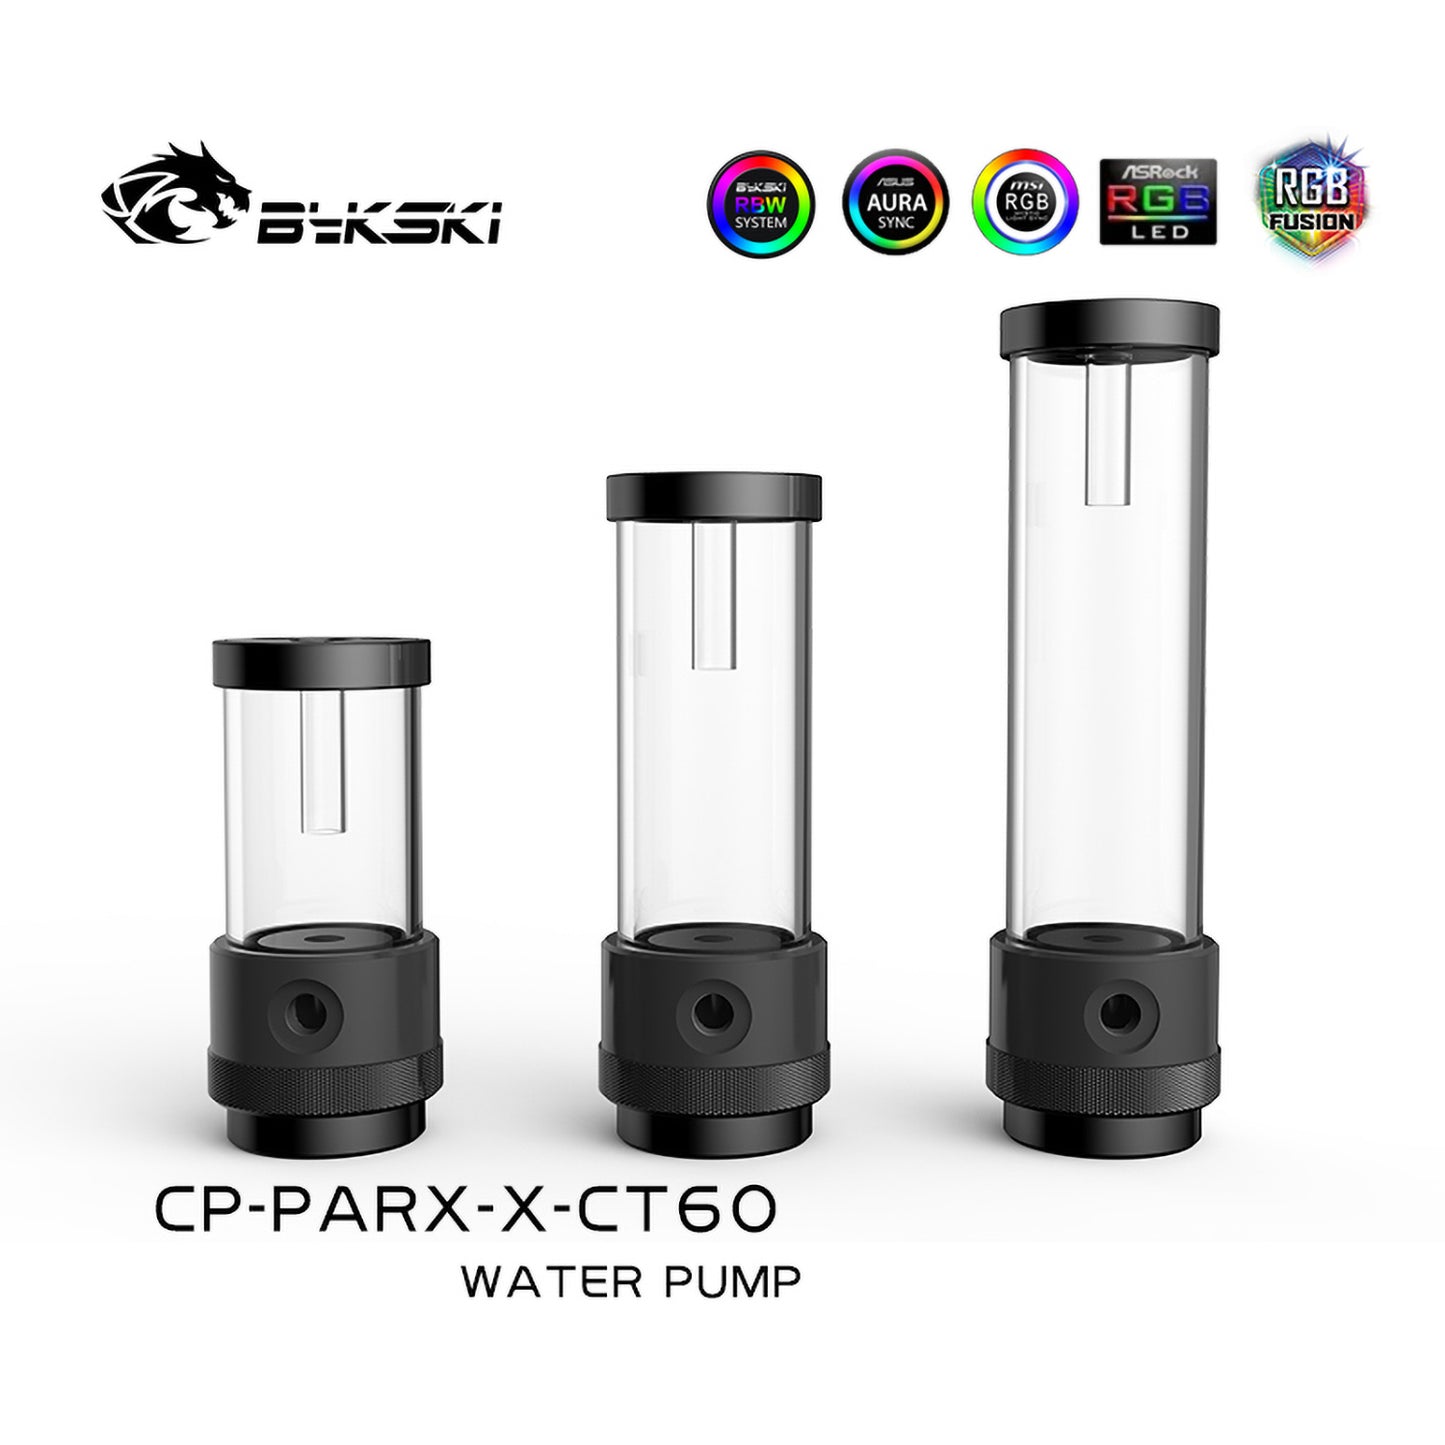 Bykski Pump-reservoir Combination, 10W Pump With Lighting, Maximum Flow 330L/H, Maximum Lift 3 Meter, Water Cooling Pump Combo, CP-PARX-X-CT60